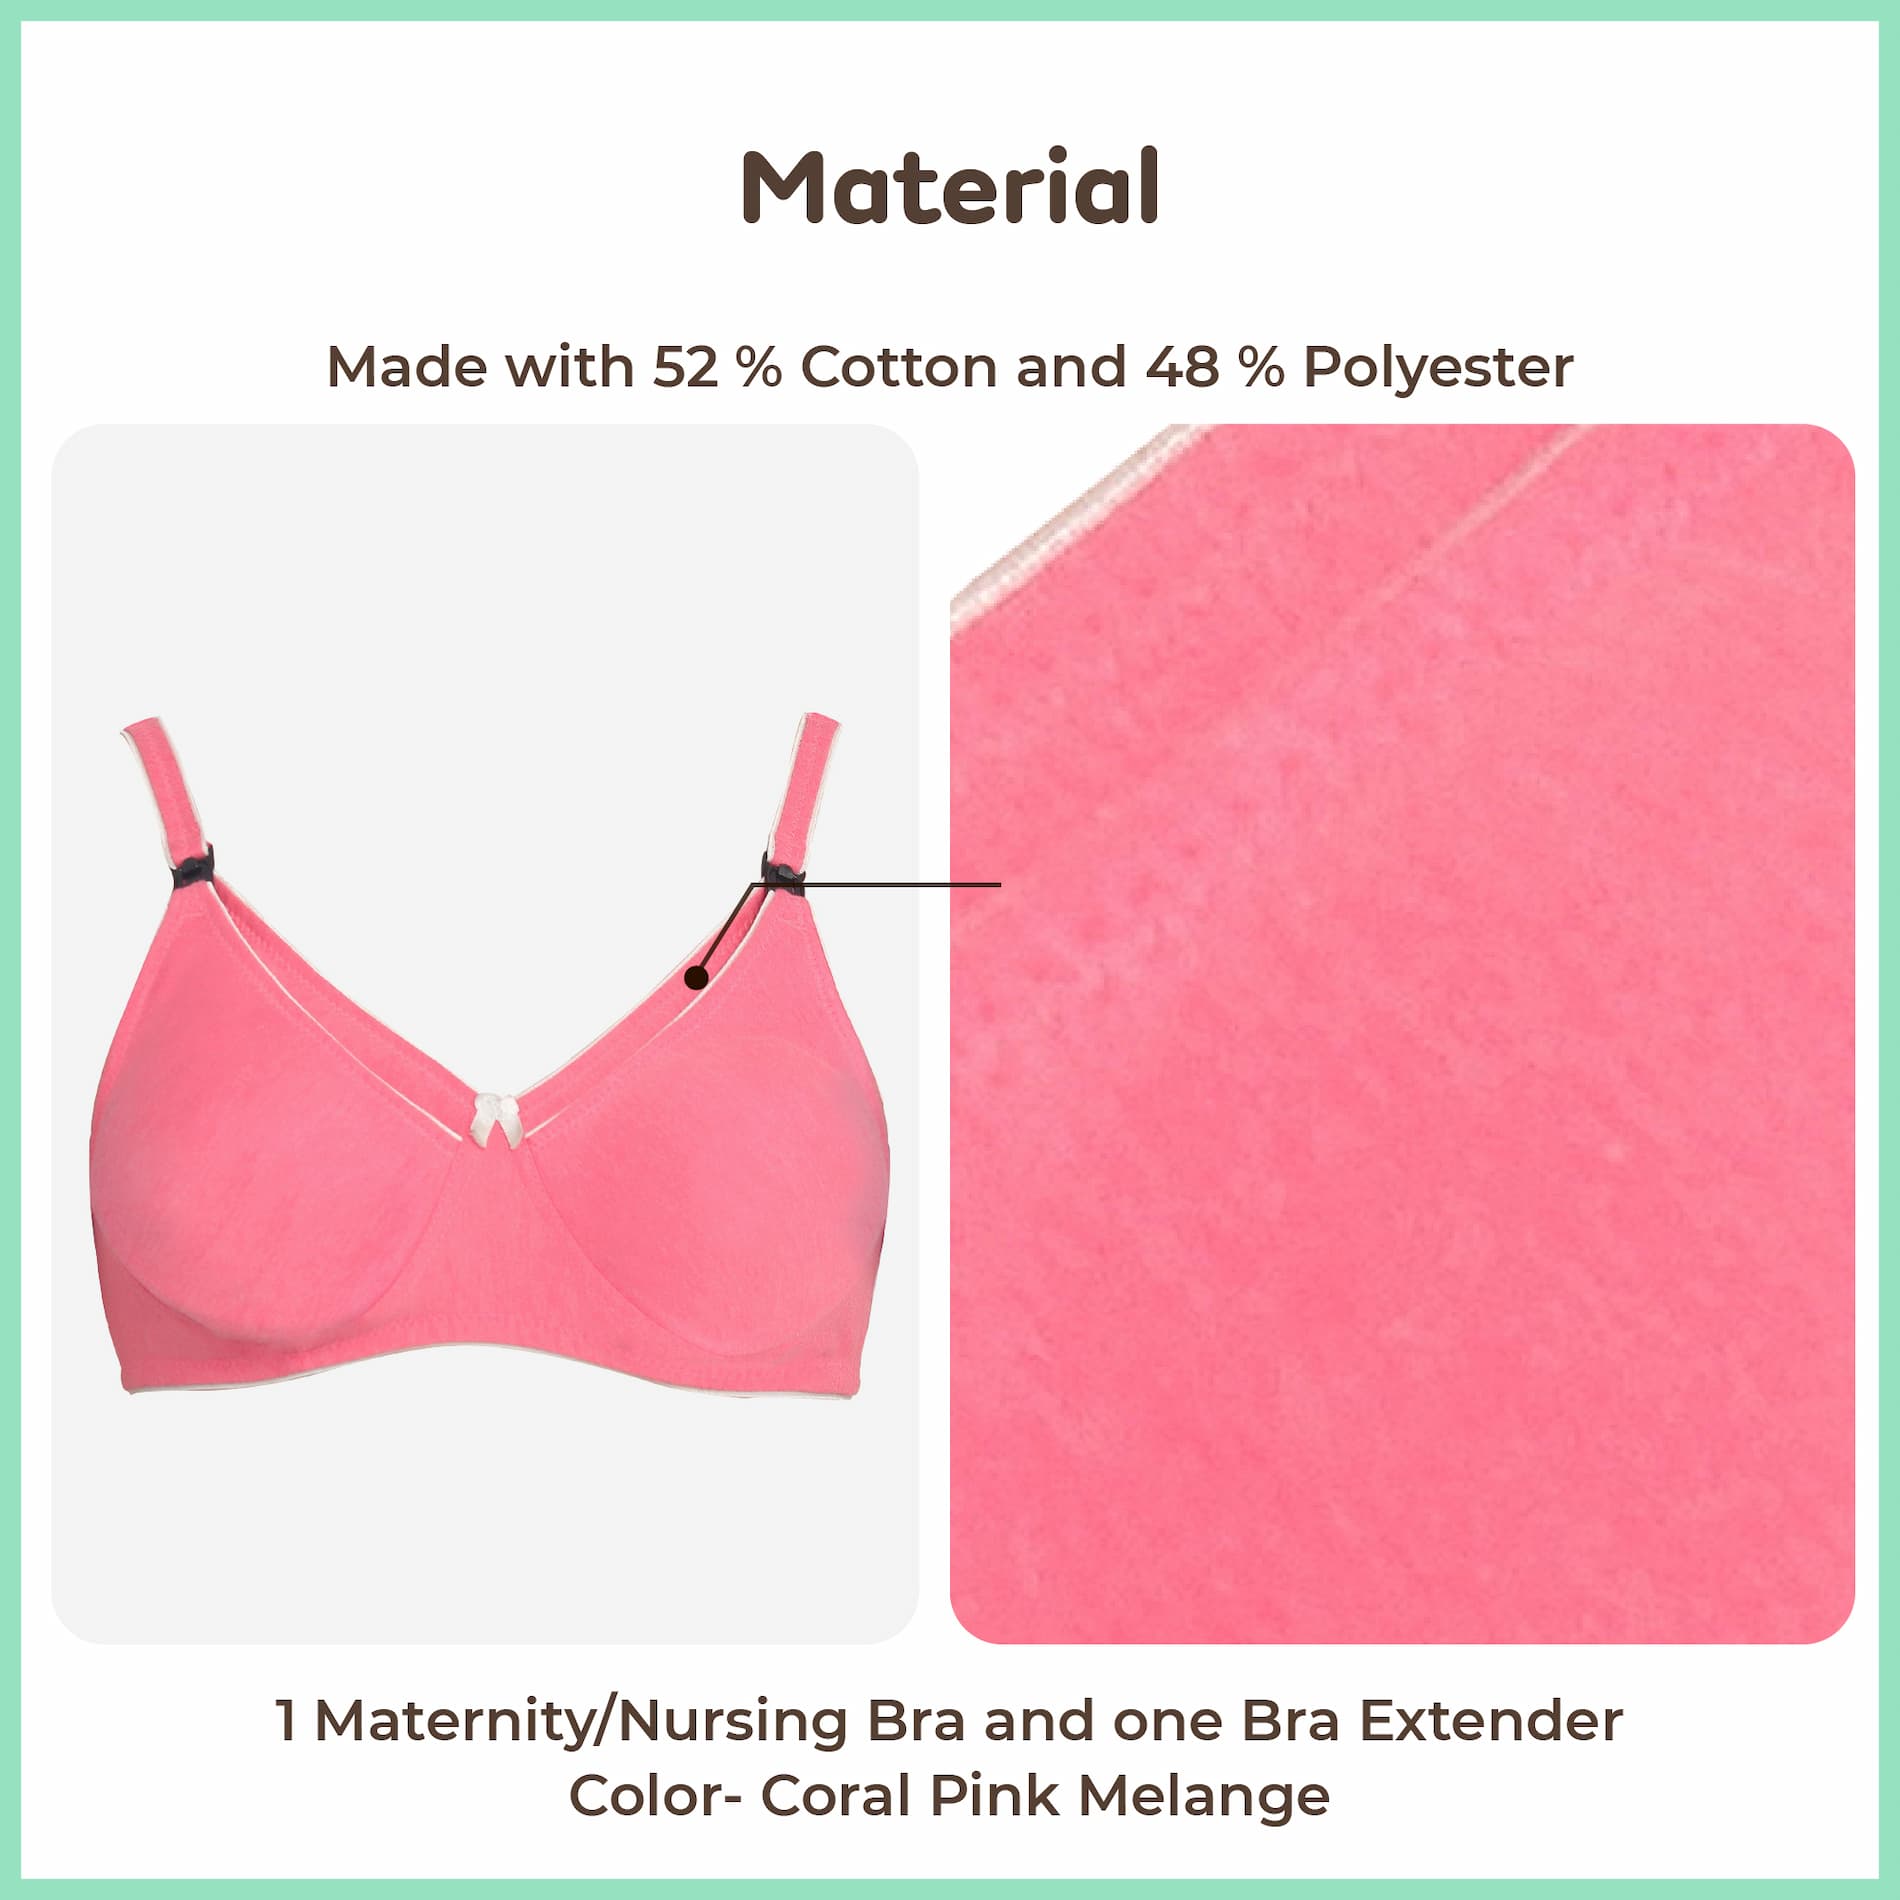 Maternity/Nursing Moulded Cup Extra Comfort Bra with free Bra Extender - Coral Pink Melange 38B 